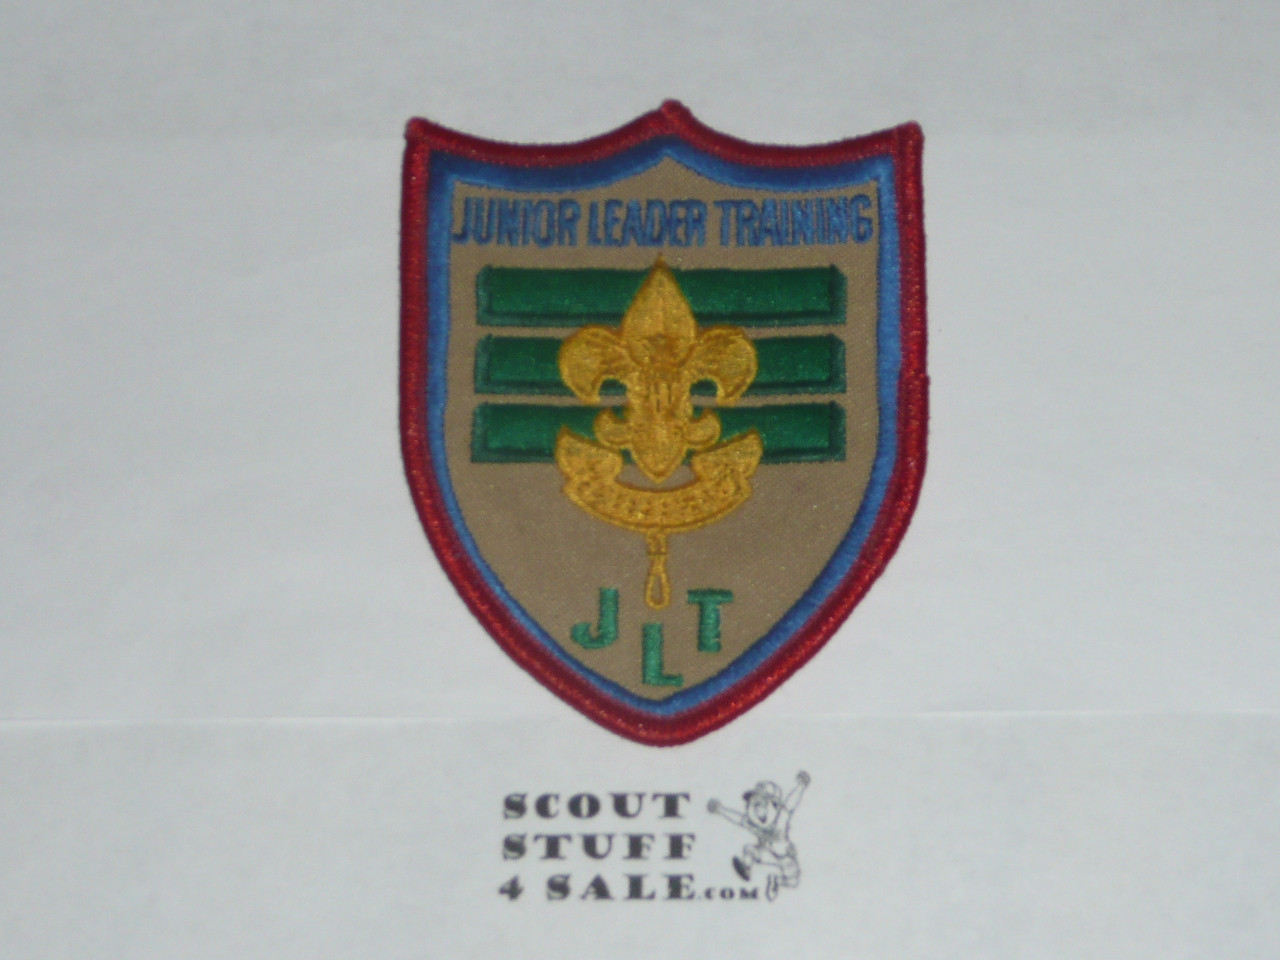 Junior Leader Training Shield Patch #2